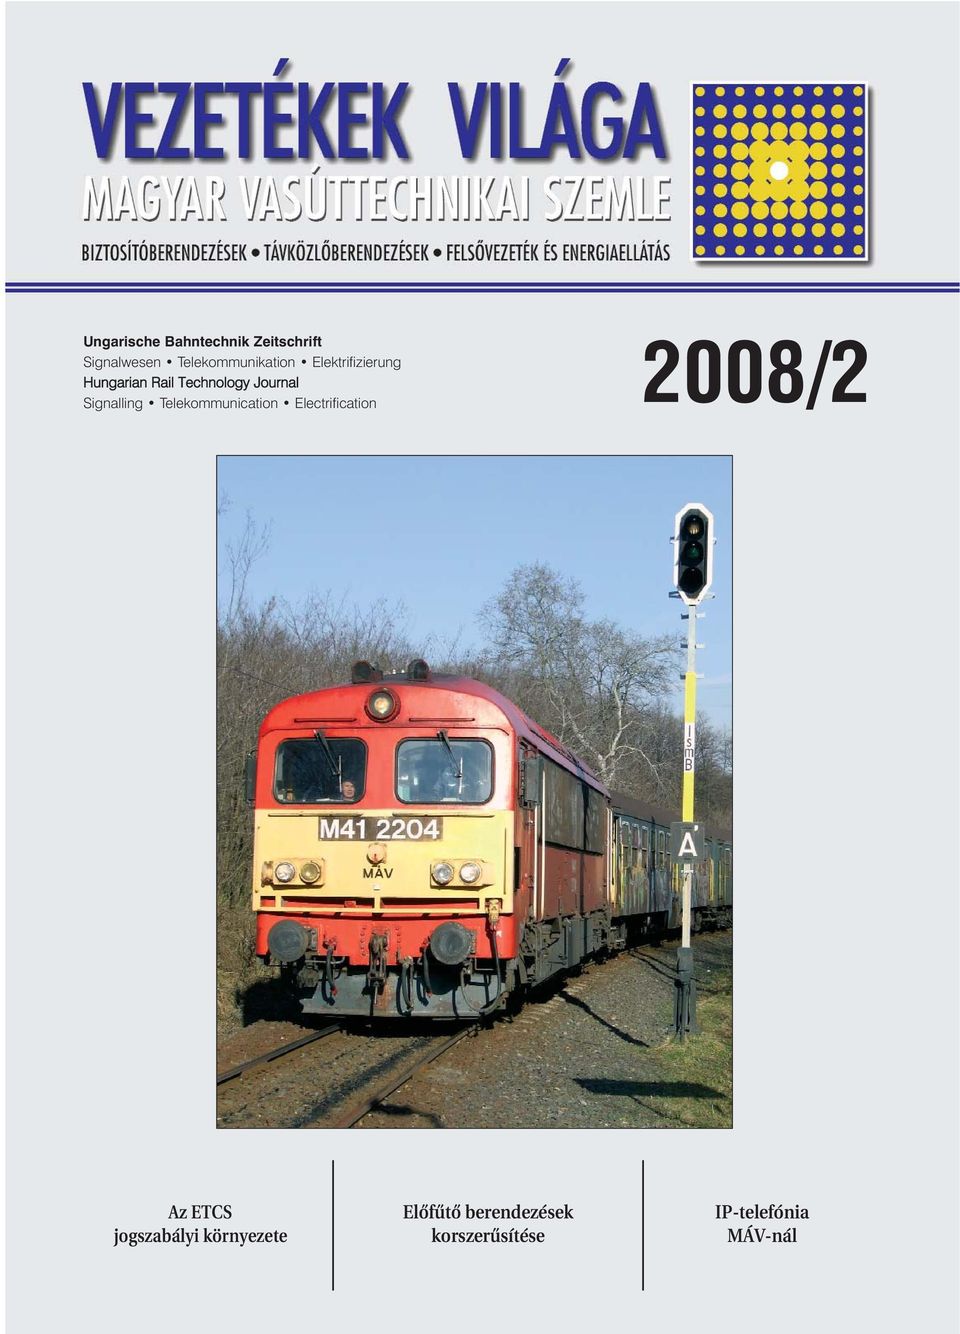 Journal Signalling Telekommunication Electrification 2008/2 Az